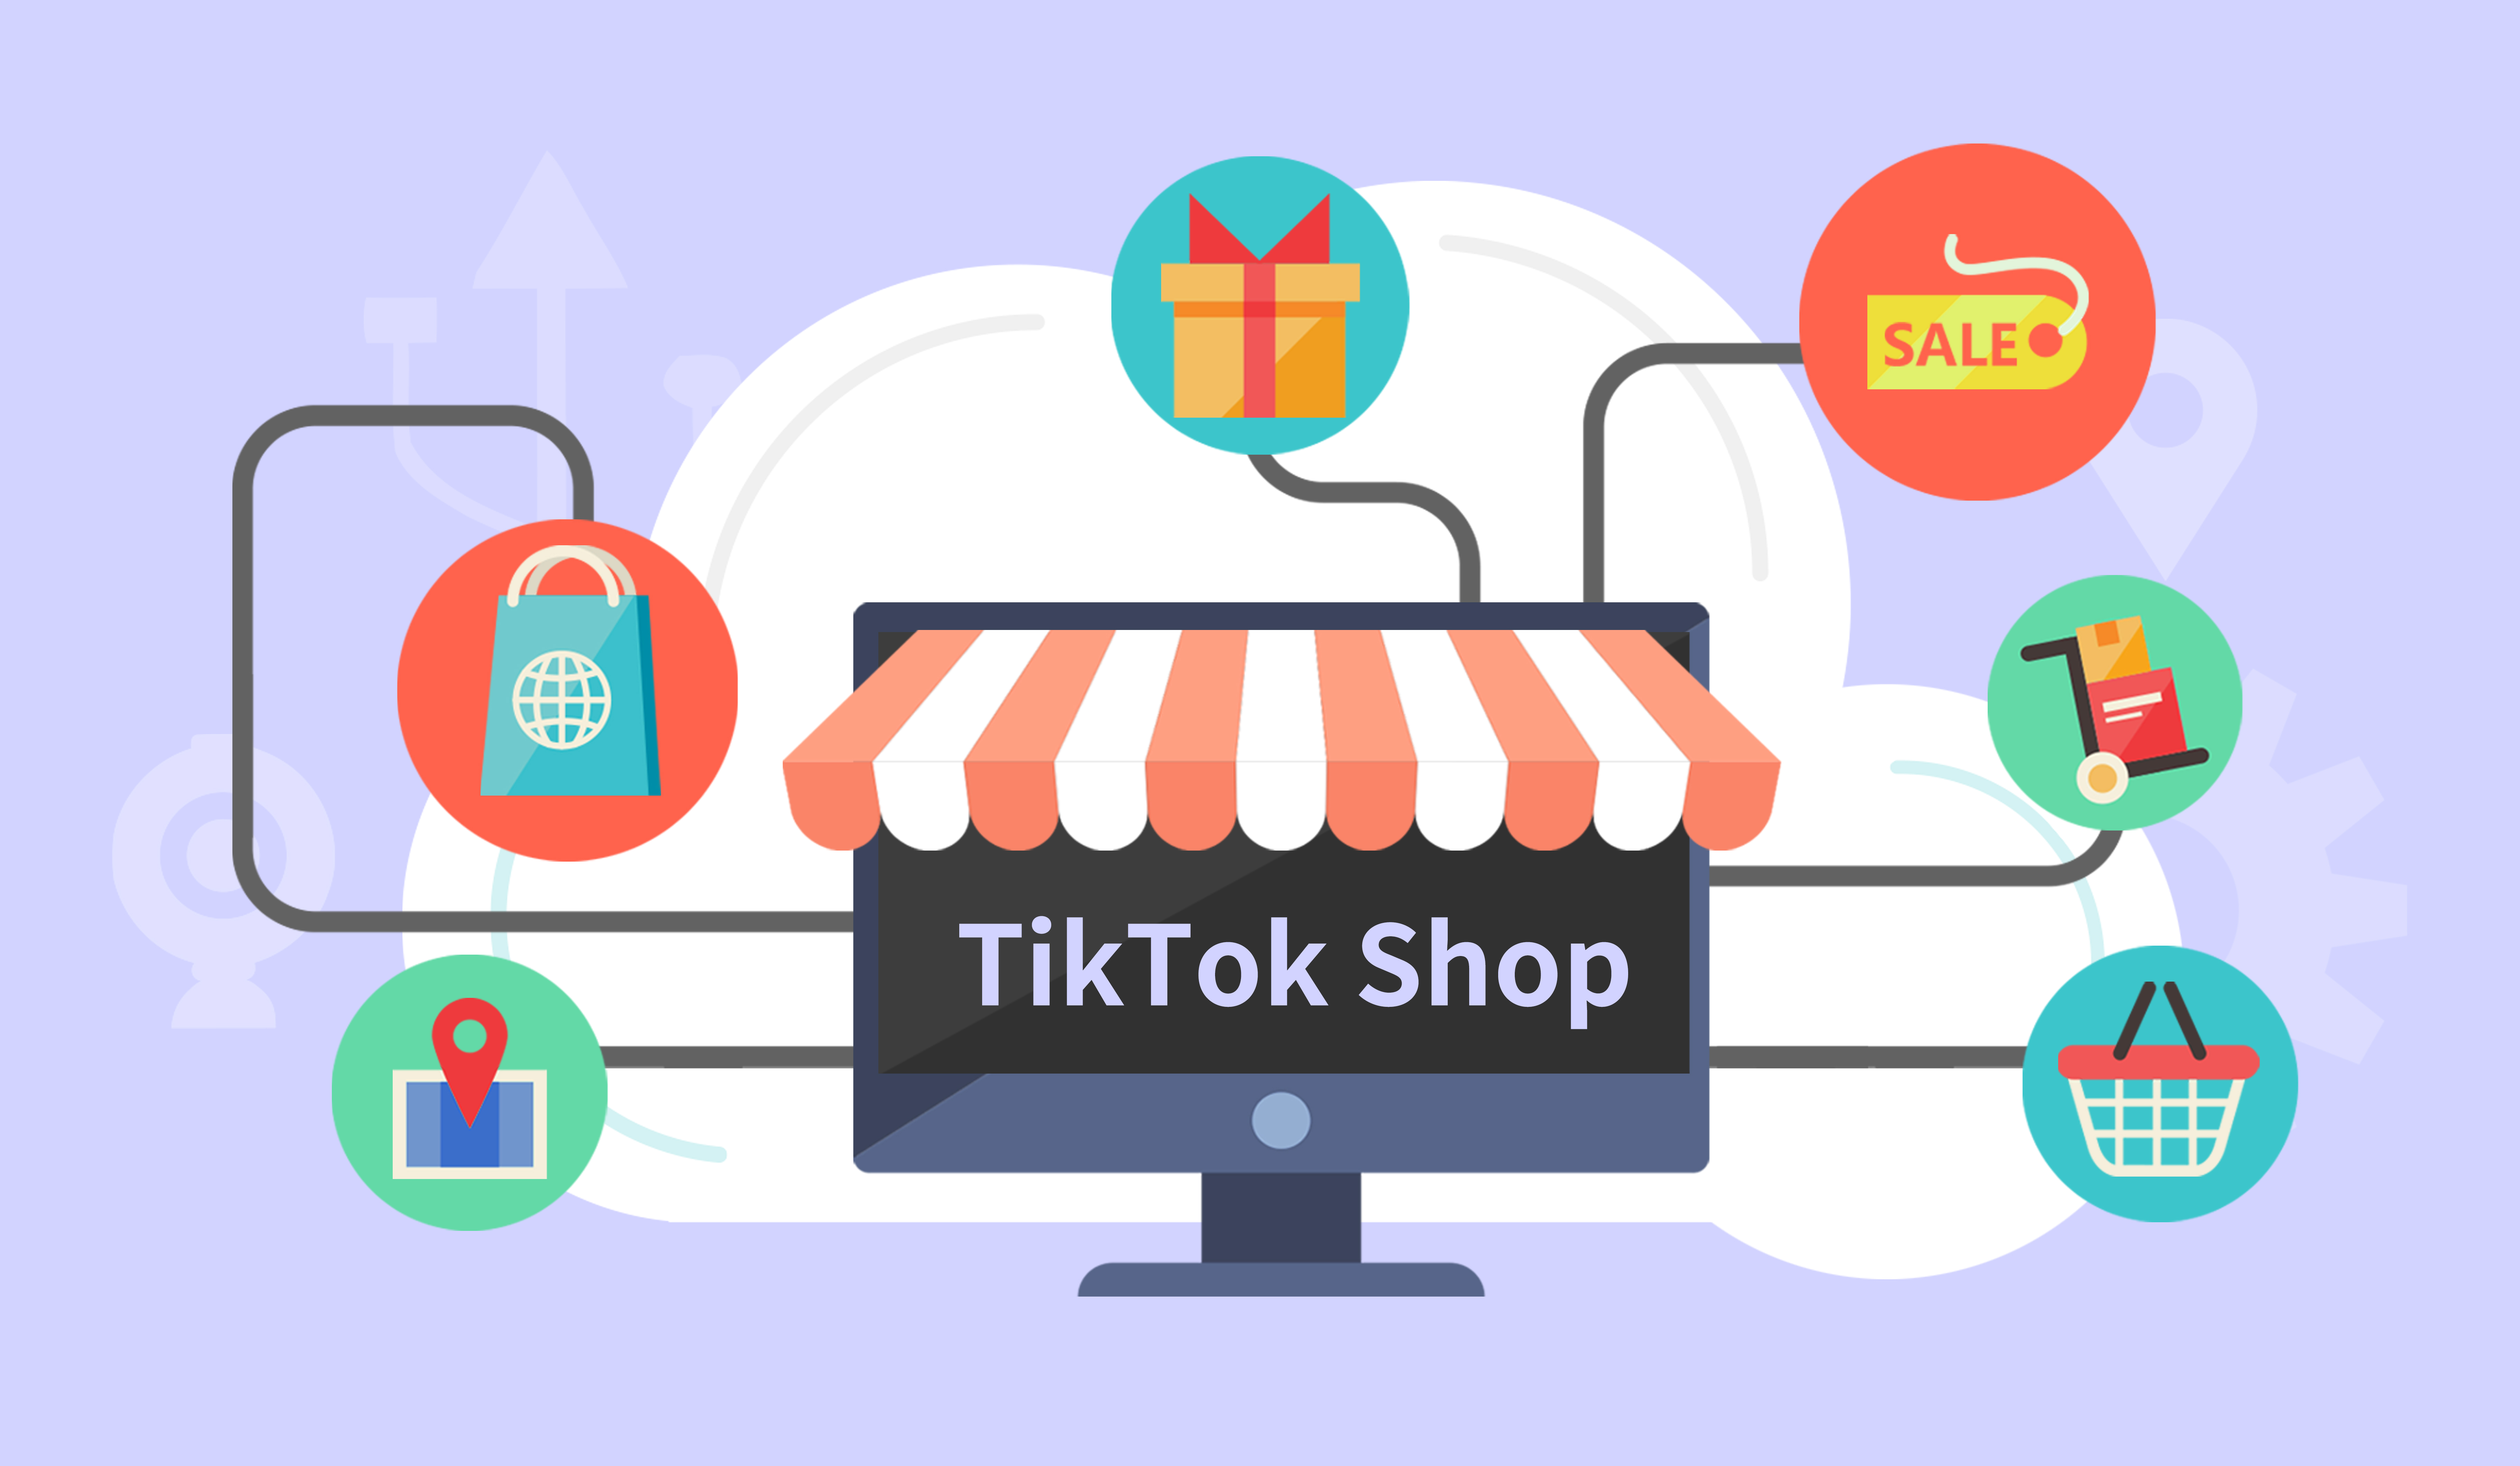 TikTok Shop复购率表现突出，仅次于亚马逊